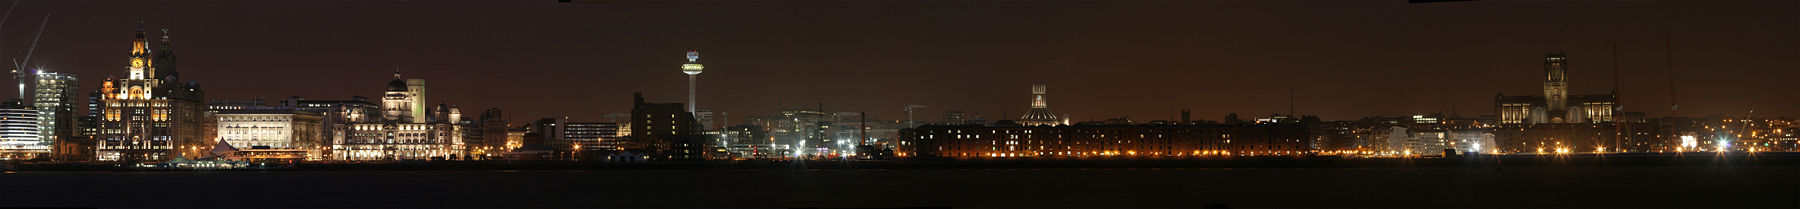 Vista panorámica de Liverpool